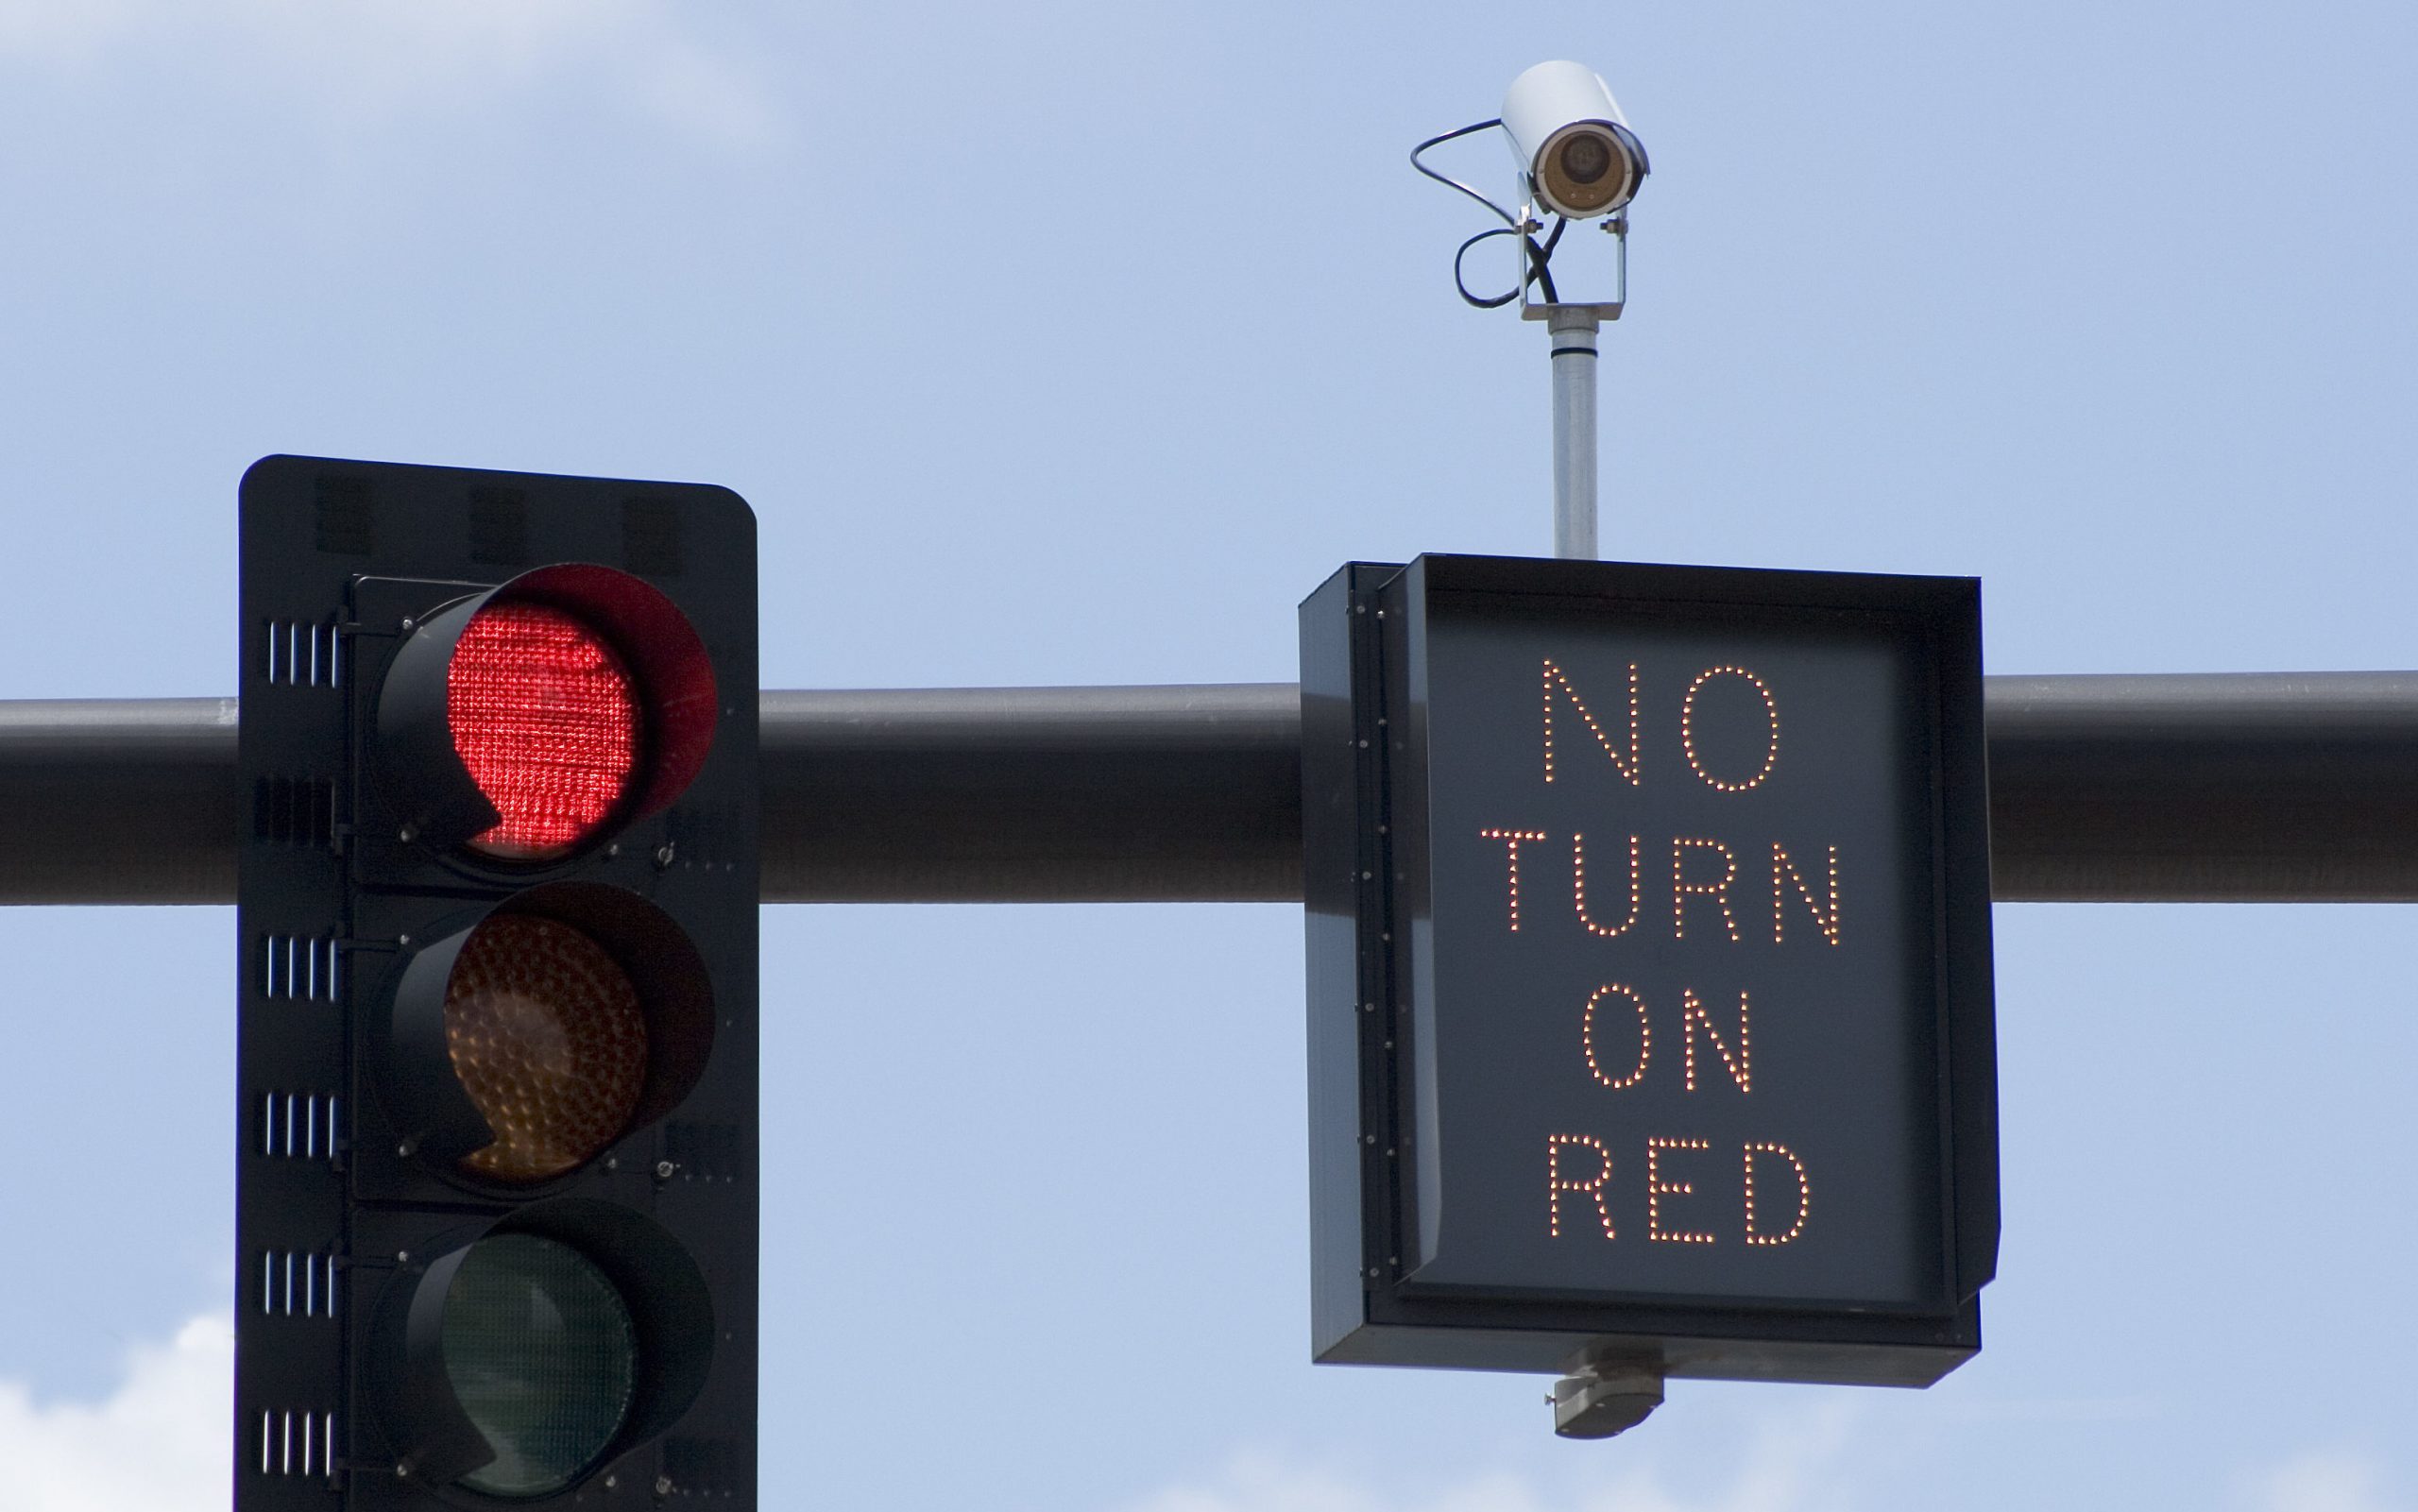 traffic light intersection